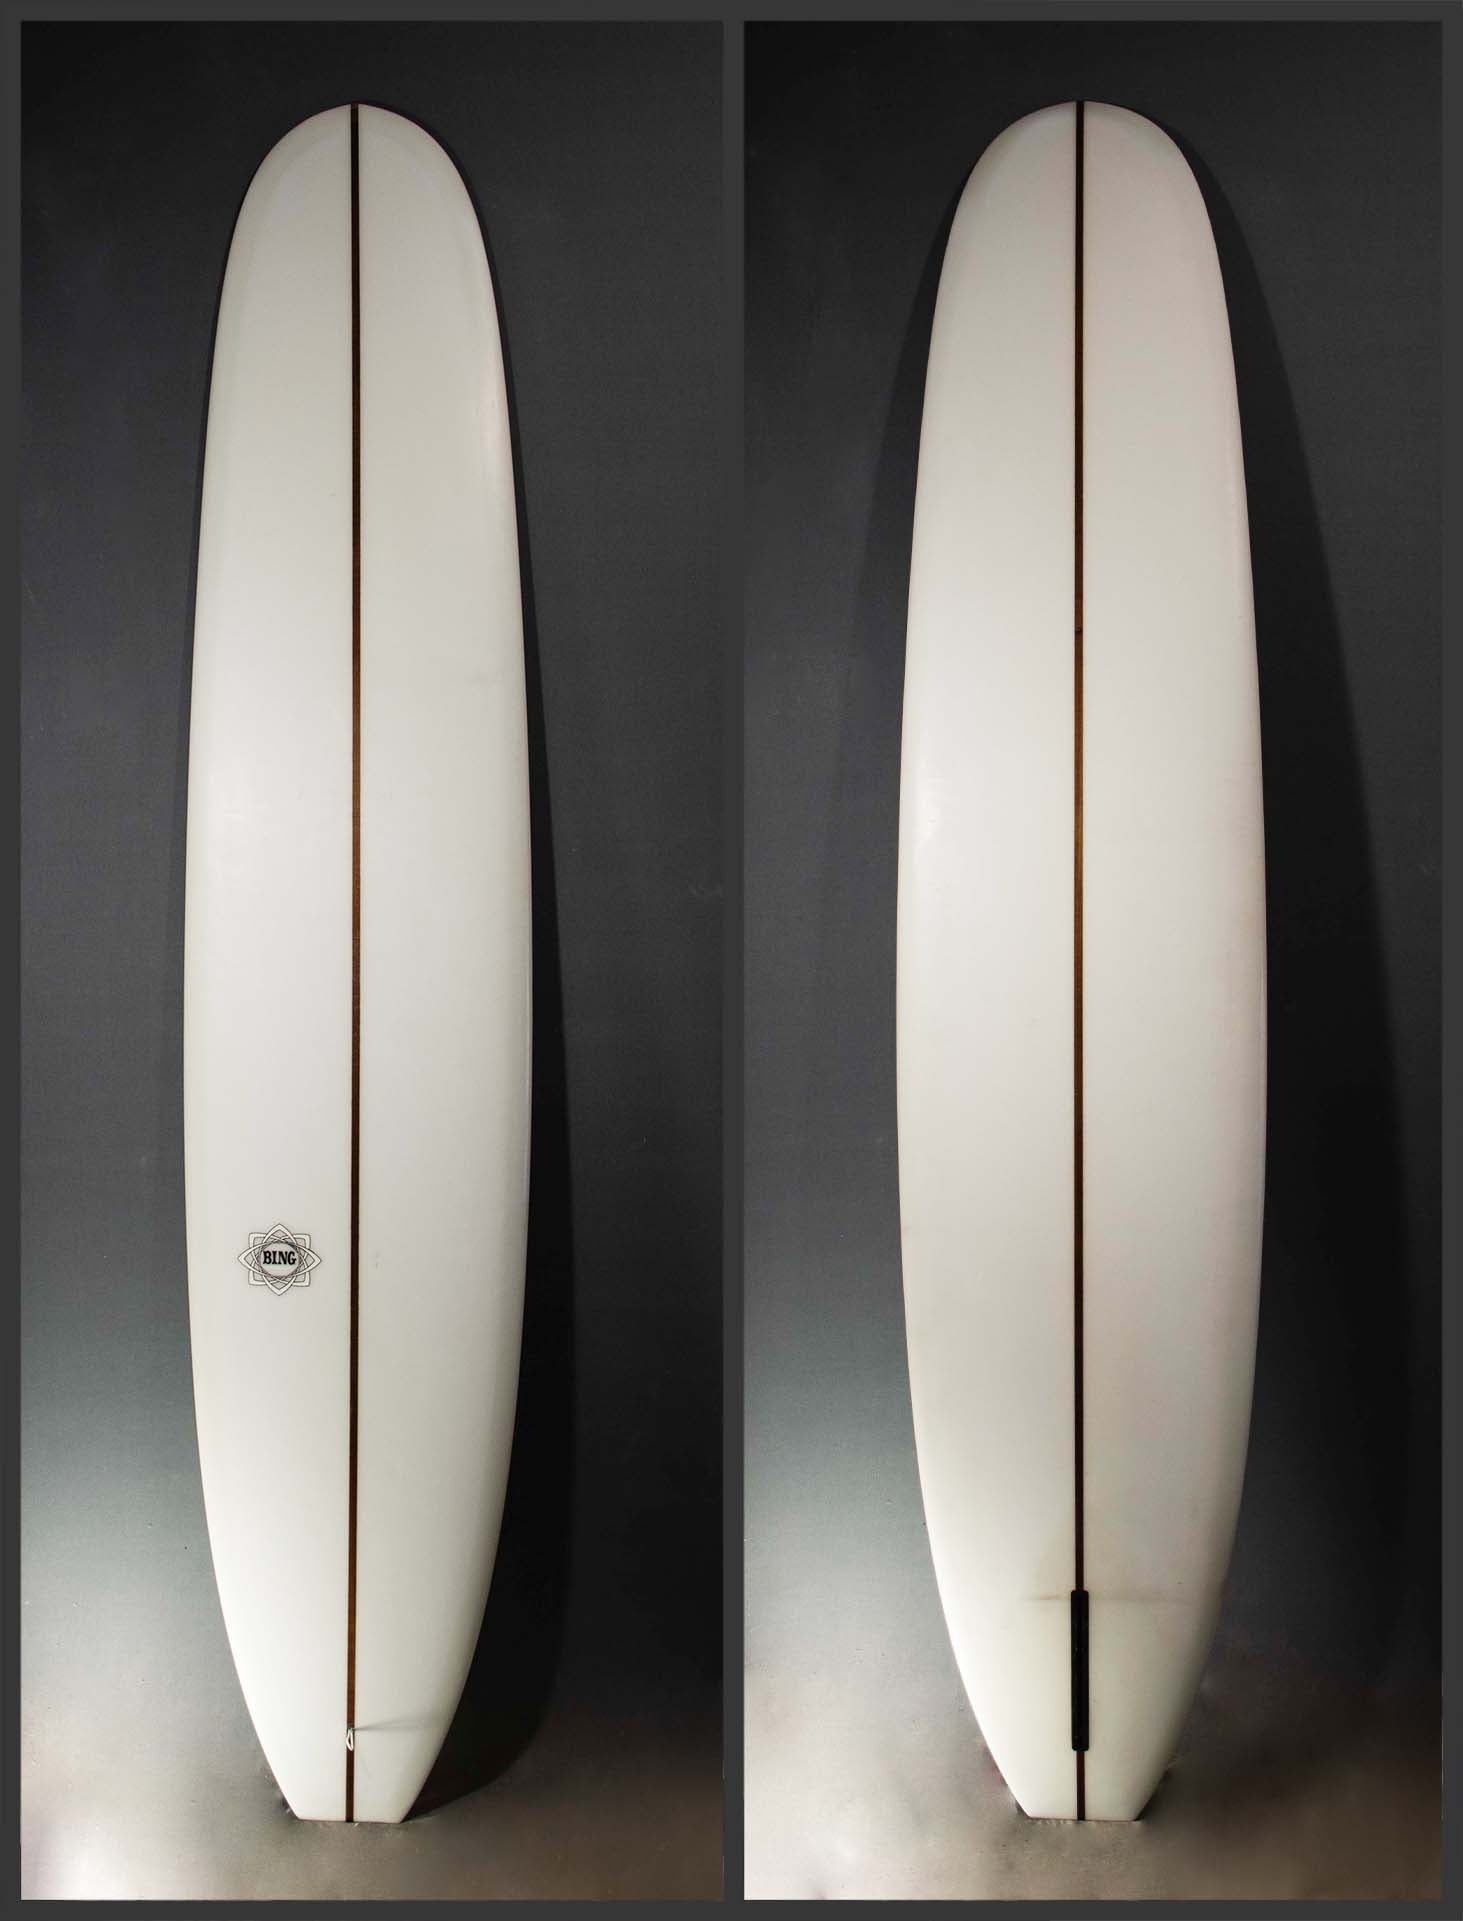 USED SURFBOARDS - Bing Surfboards